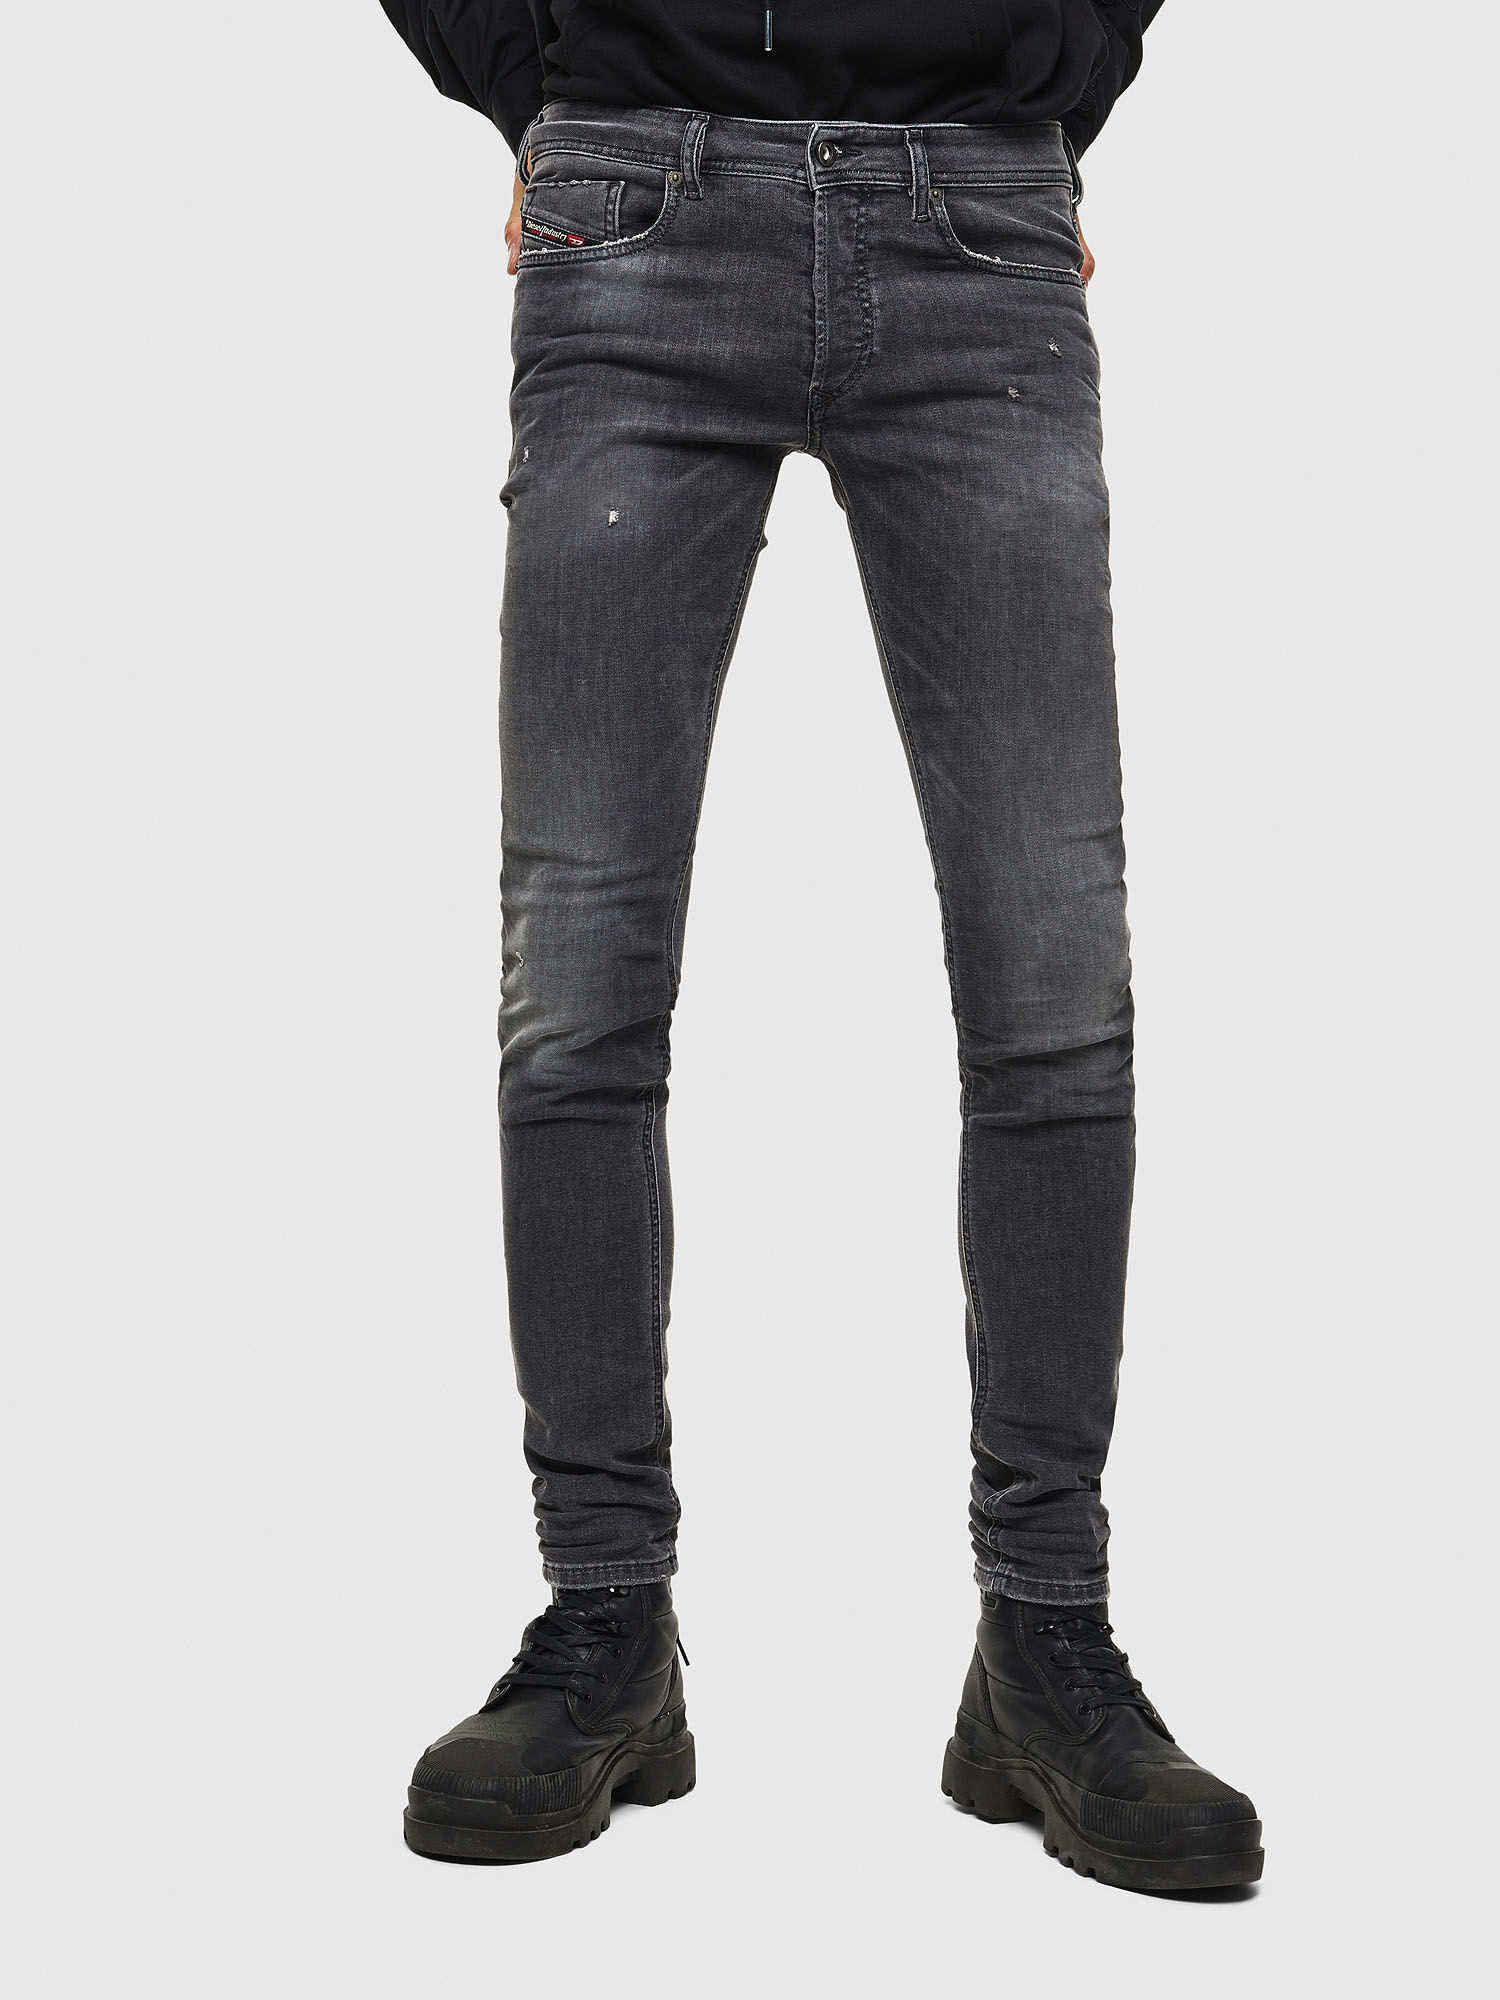 jaqueta jeans forum masculina